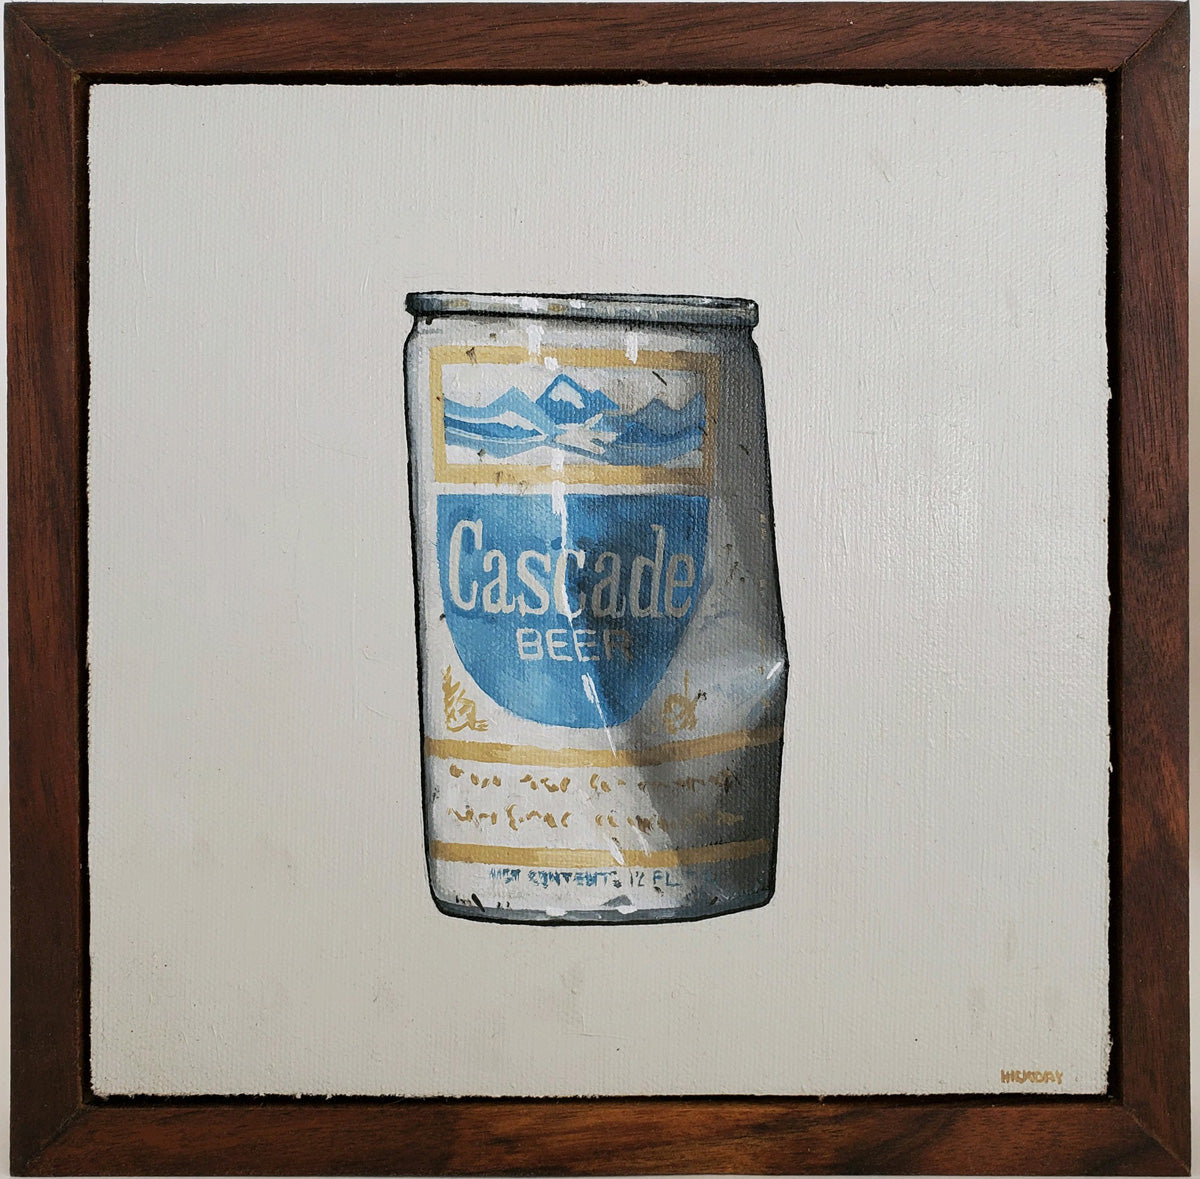 2. Cascade Beer Can